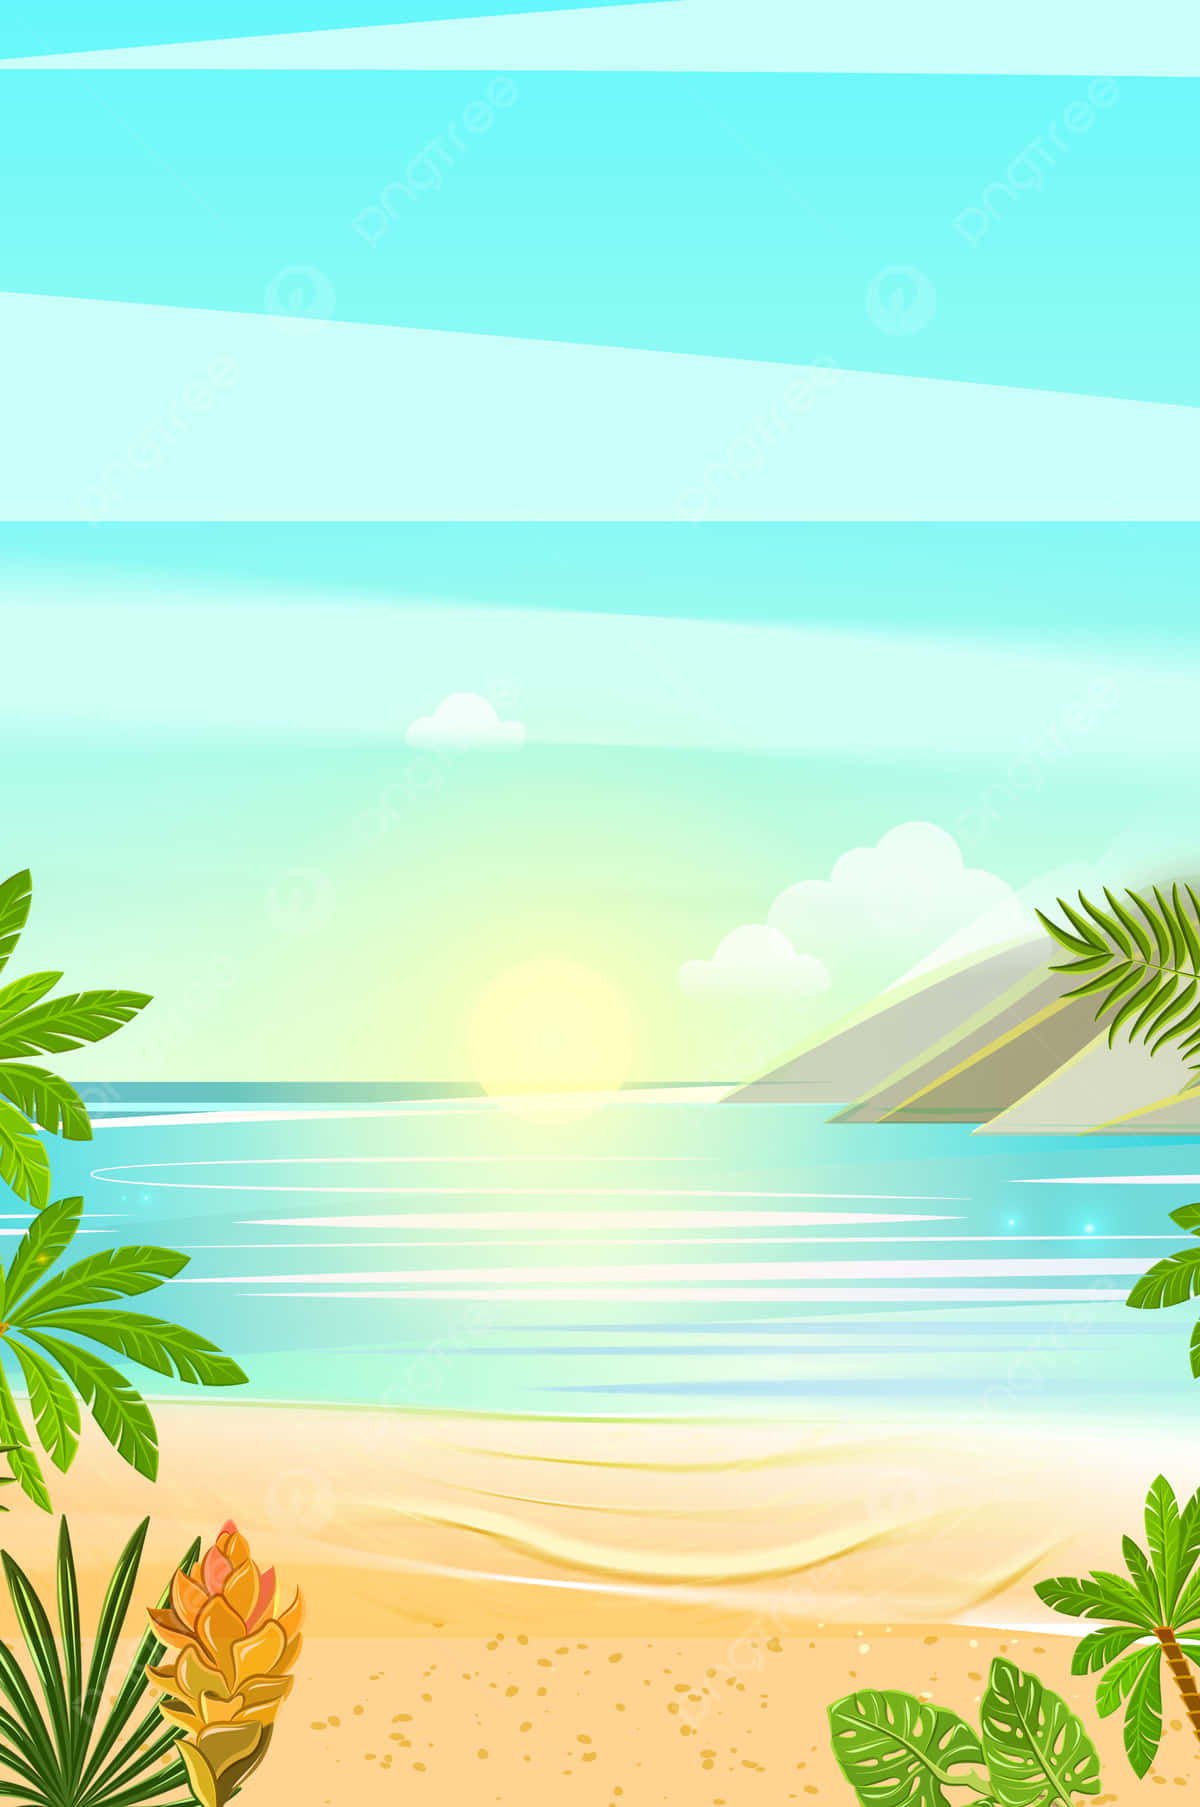 A Tropical Beach Scene With Palm Trees And A Beach